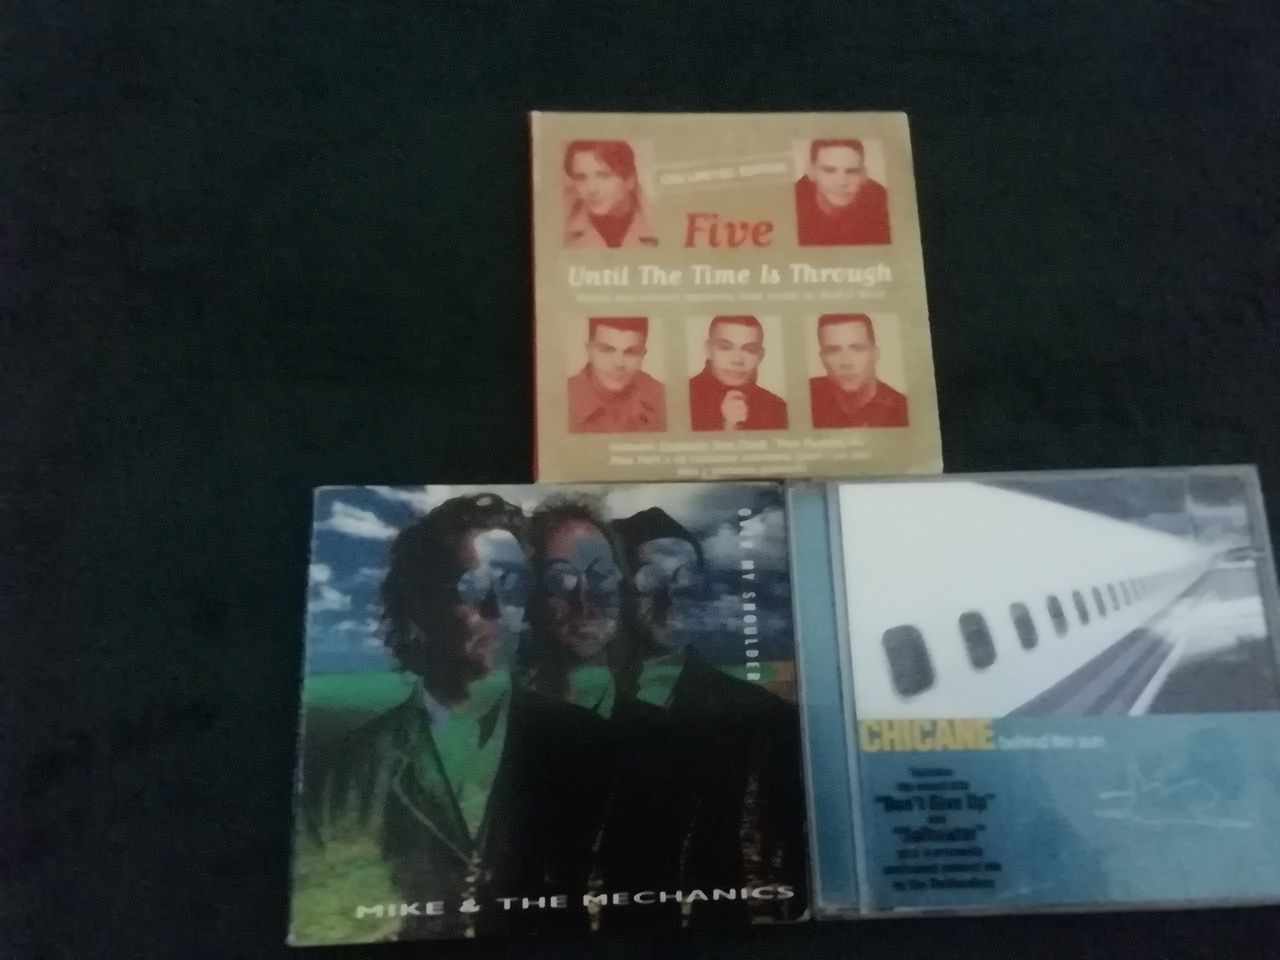 CD Five / Guns'n'roses / Mike & The Mechanics